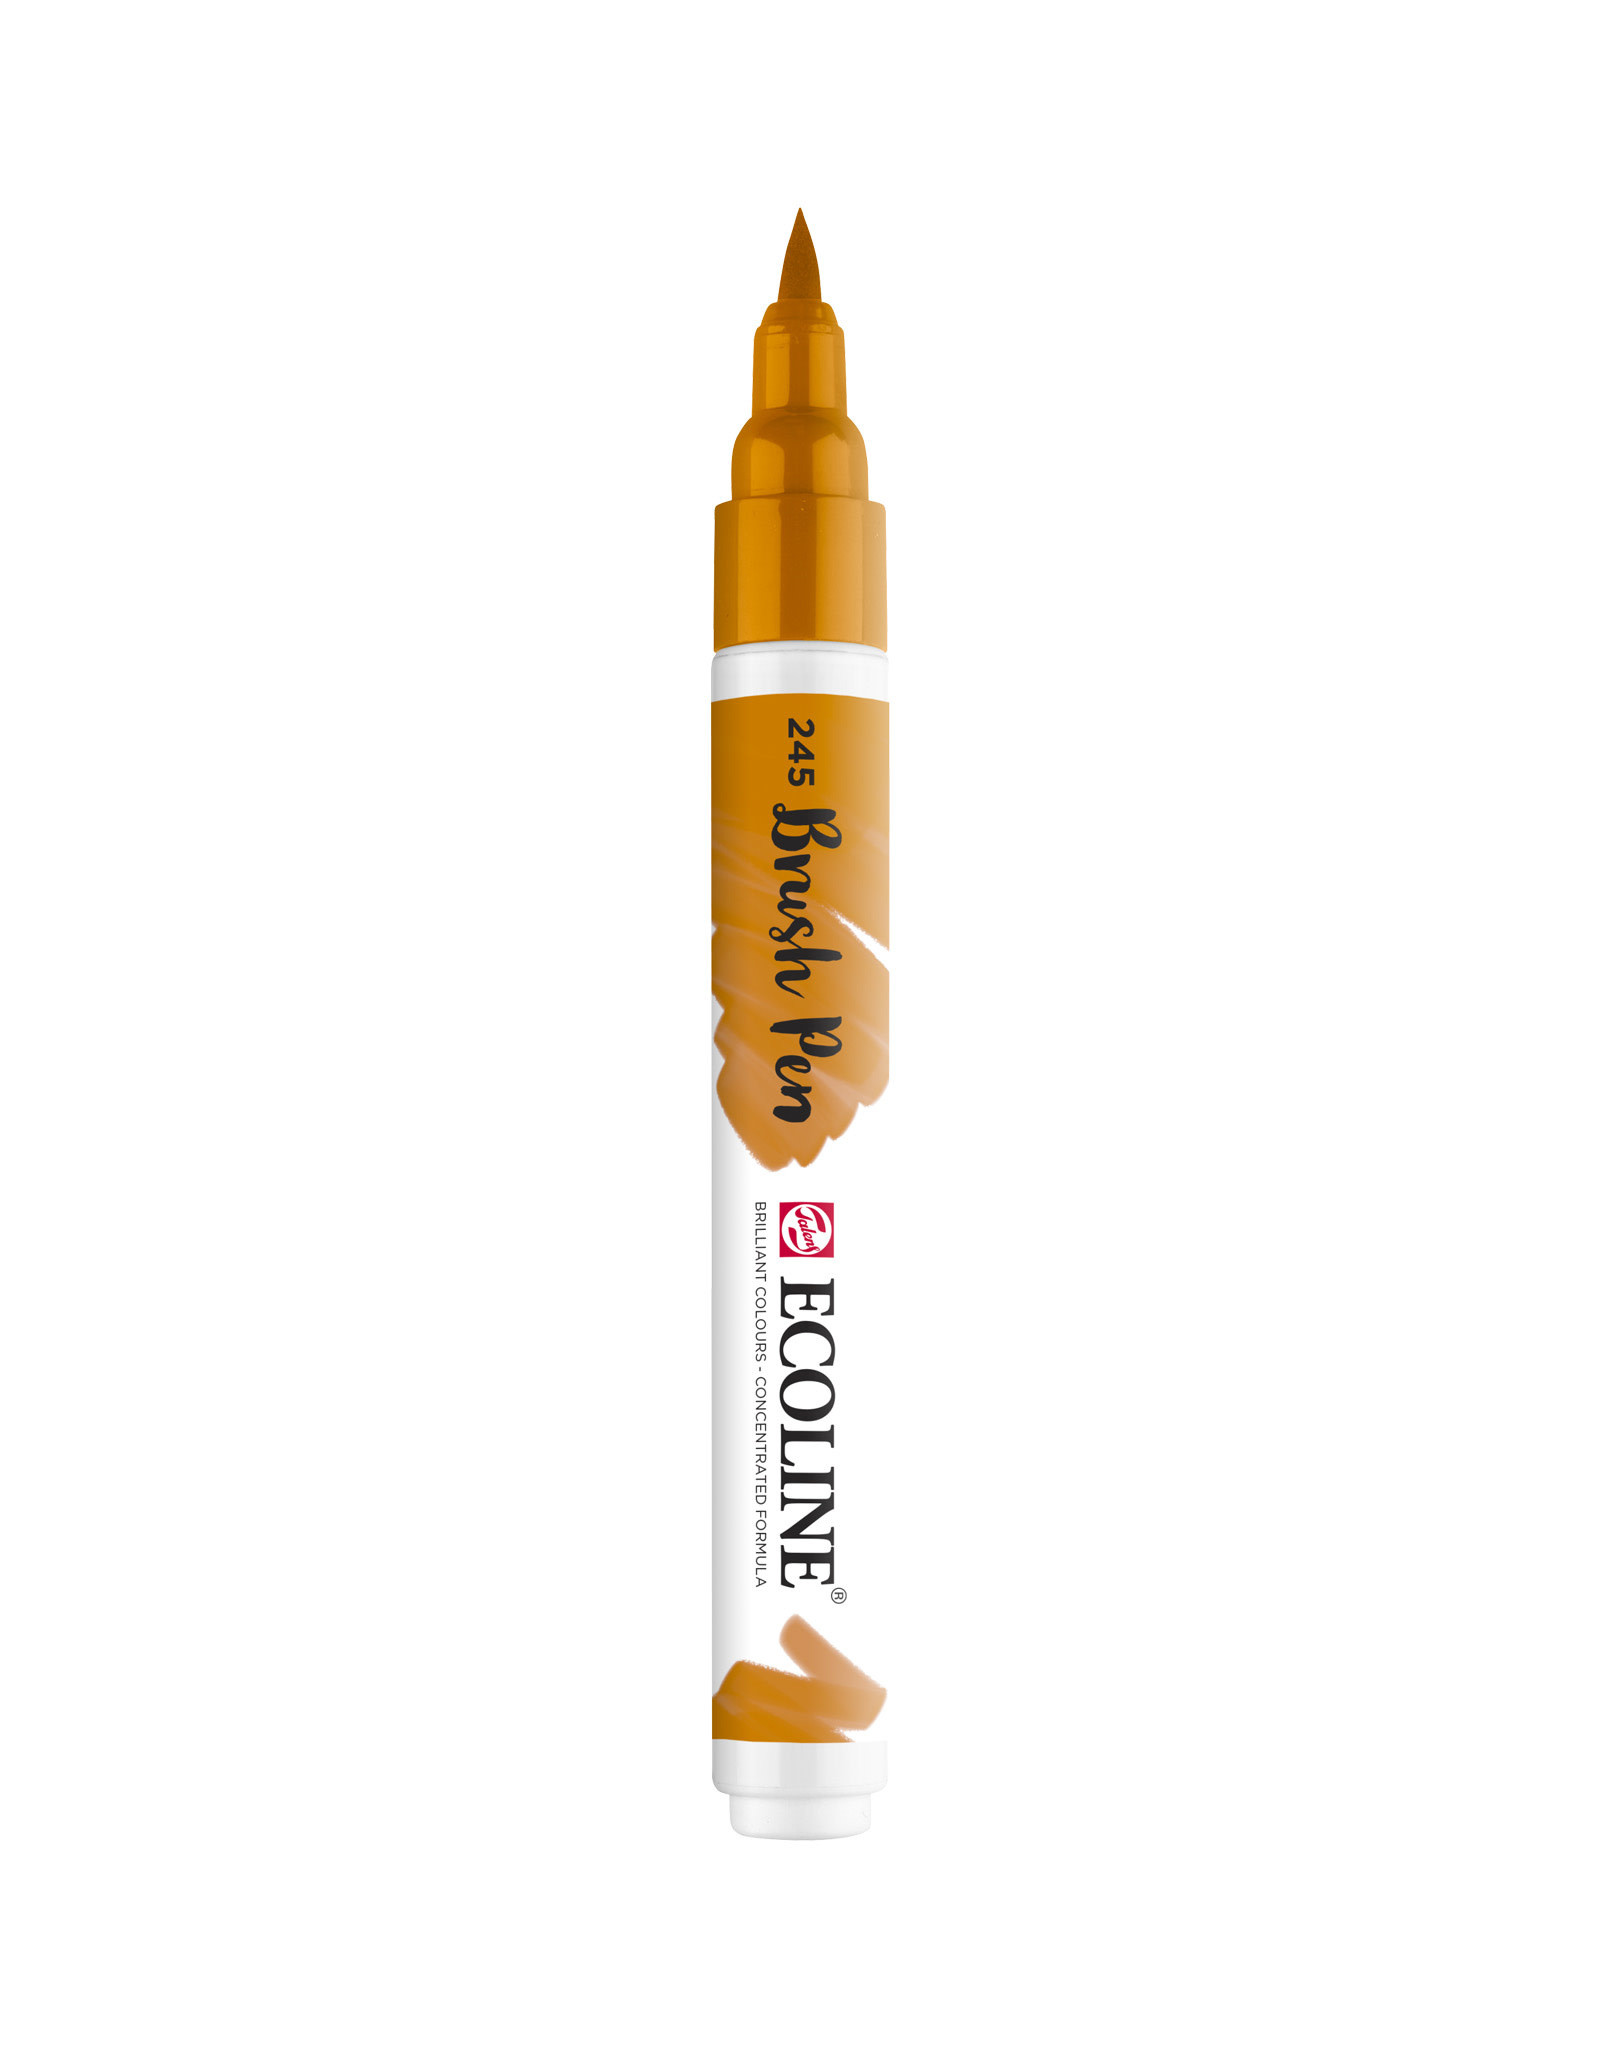 Royal Talens Ecoline Watercolour Brush Pen, Saffron Yellow